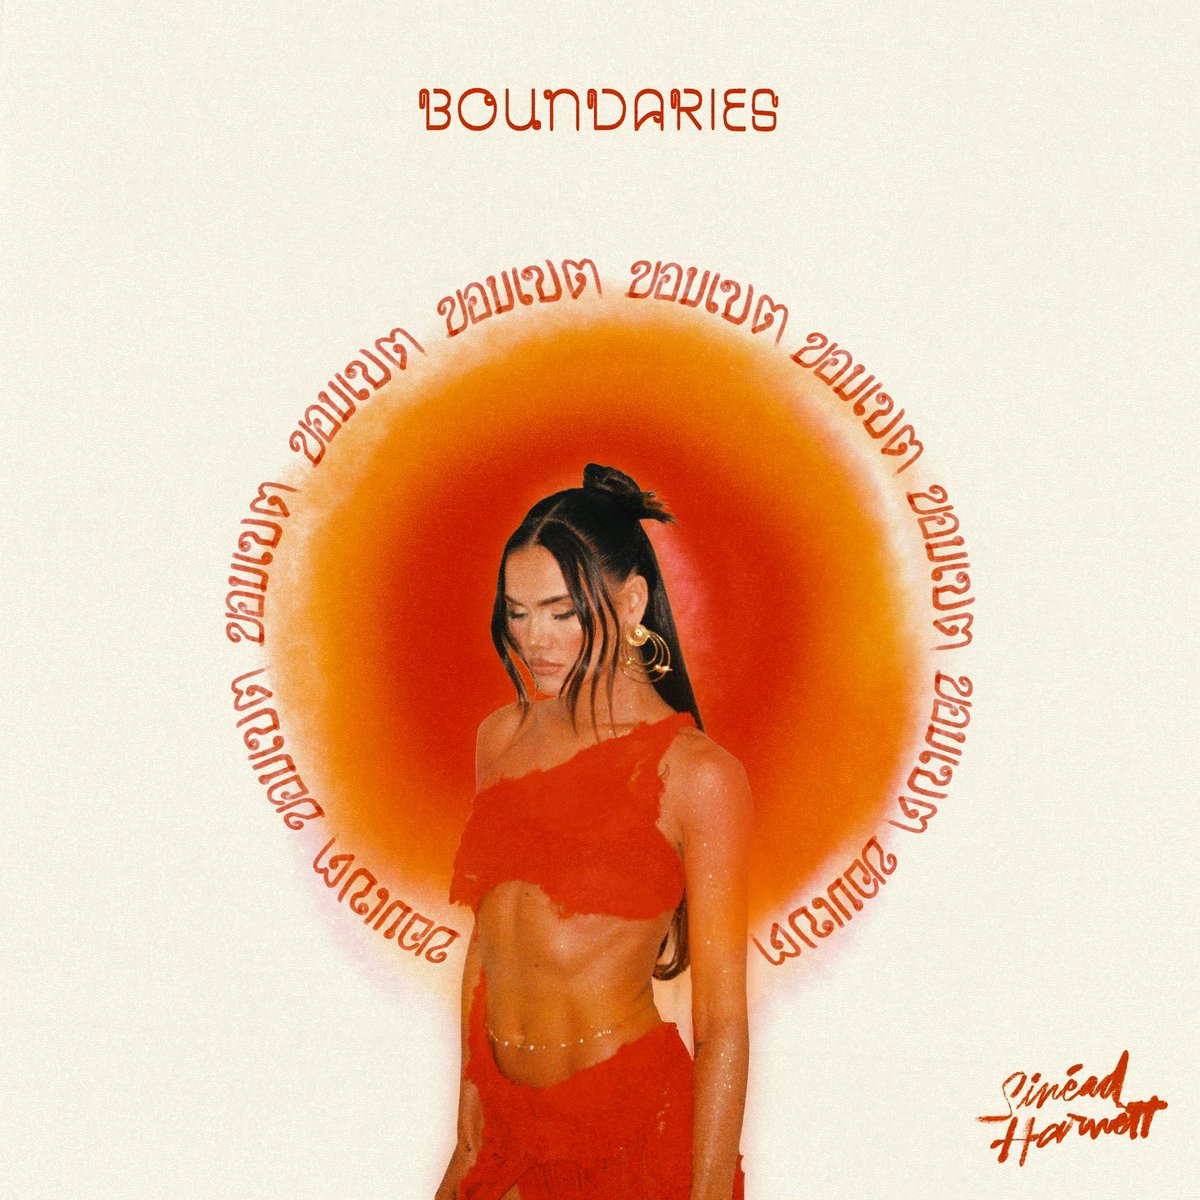 🎧 ESSENTIAL LISTEN 🎧 London-born, LA-based R&B star @SineadHarnett returns with her third studio album, ‘Boundaries’—a cathartic, cleansing offering 💎 📲 bit.ly/3y22pE3